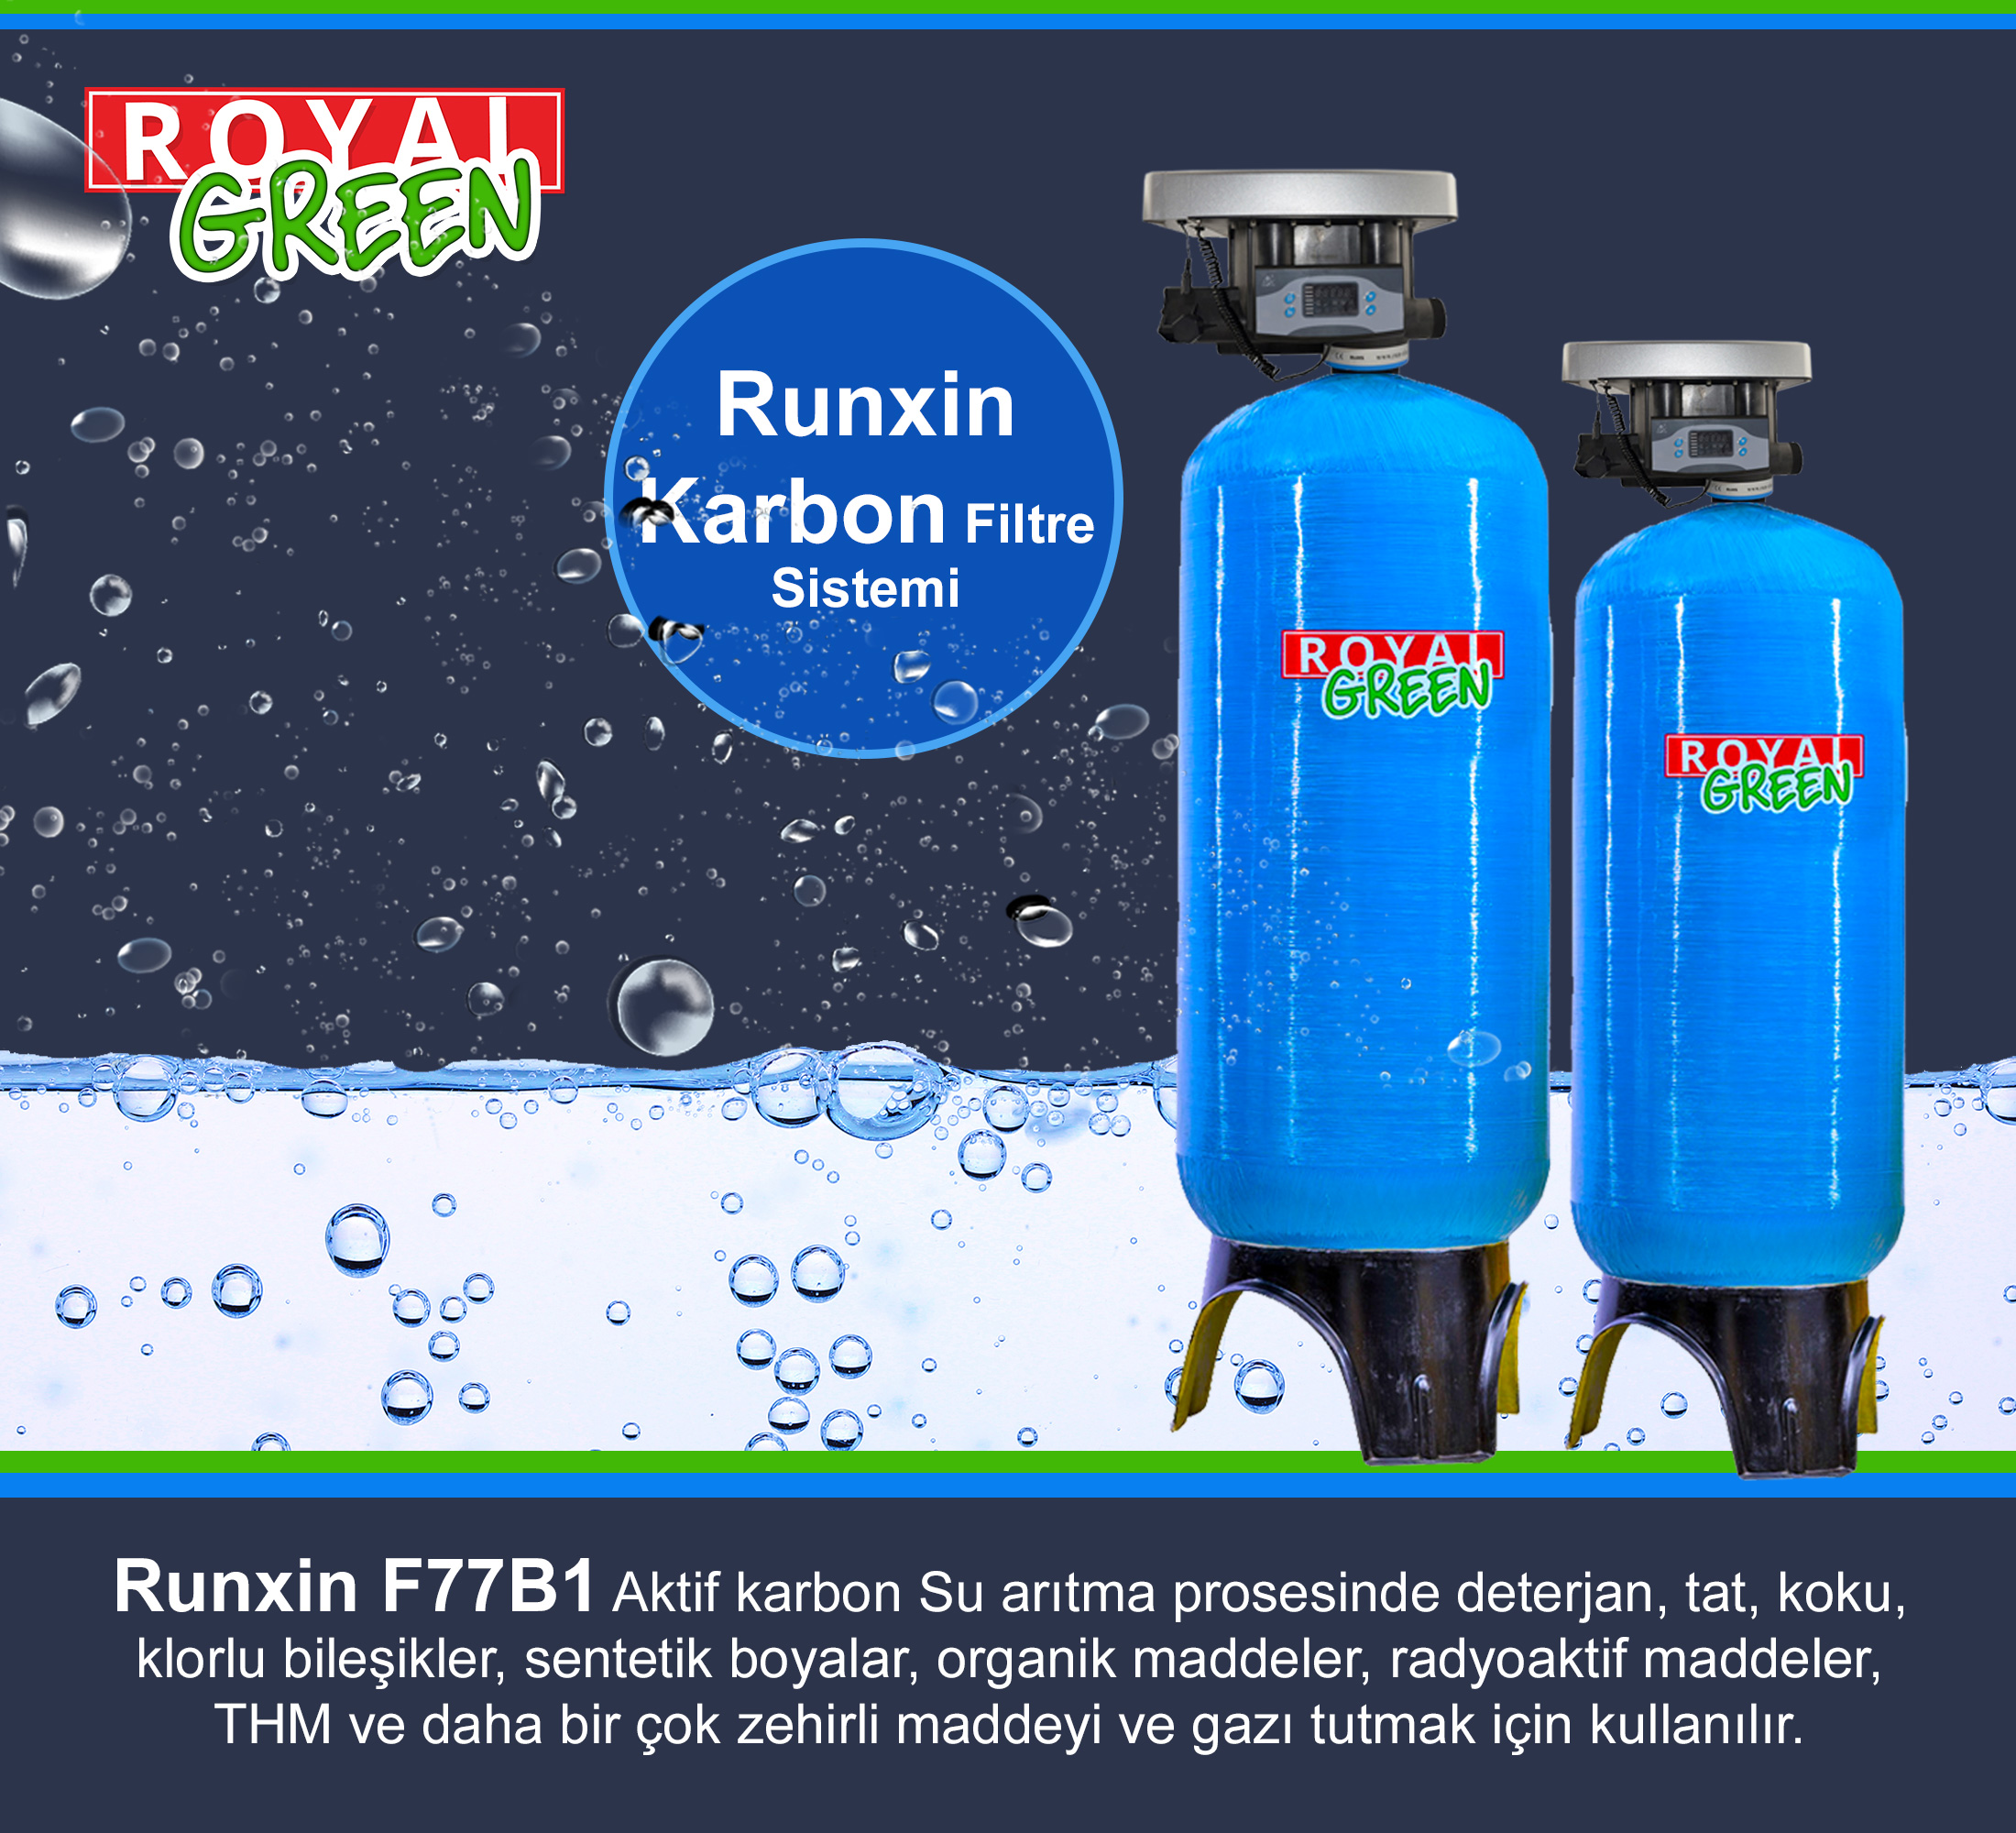 Runxin N77B1 Valfli Karbon Filtreleme Sistemleri